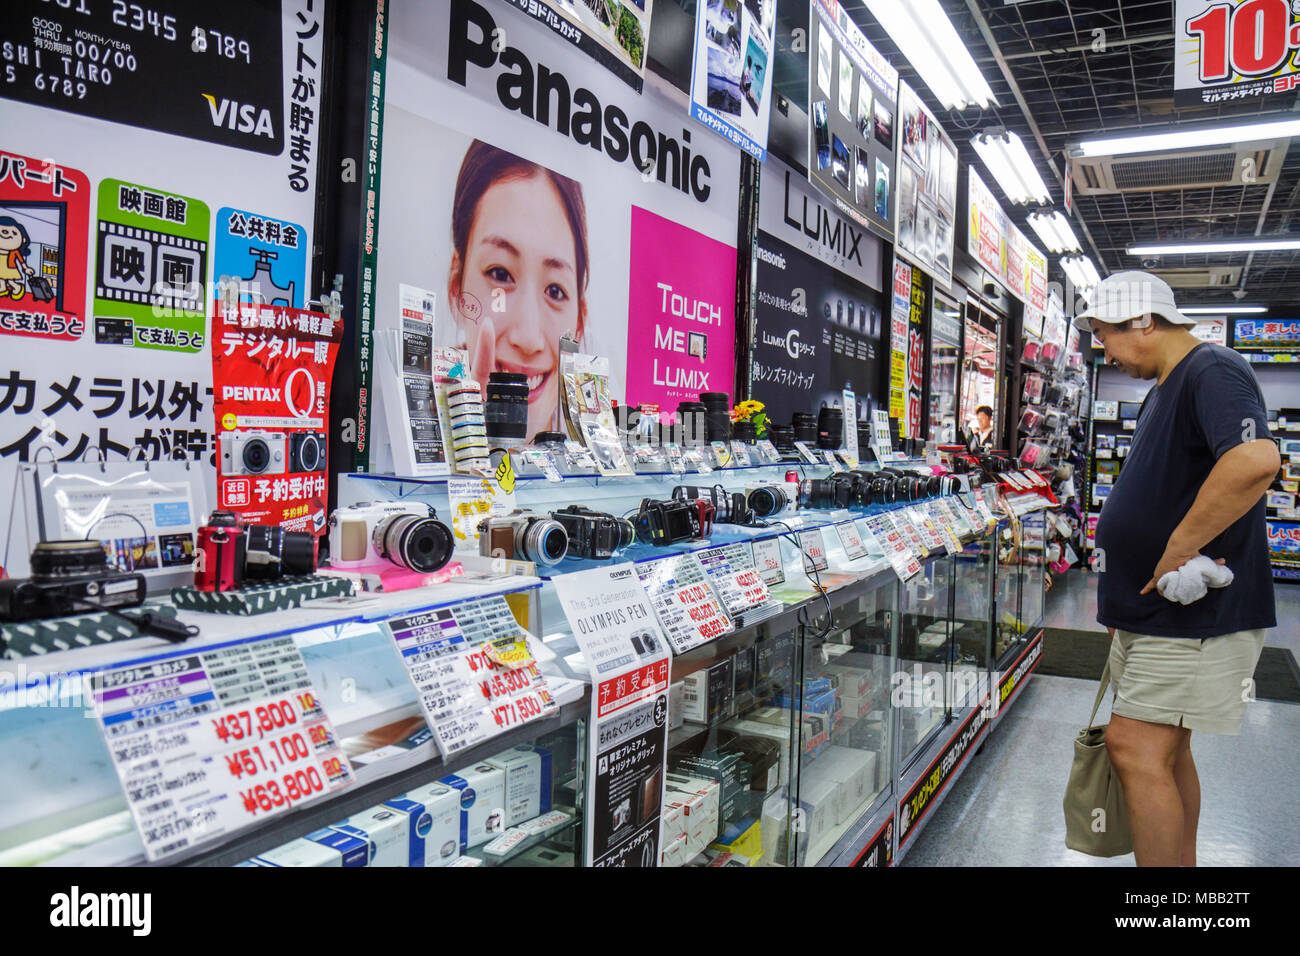 Tokyo Japan,Asia,Orient,Shinjuku,electronics store,digital cameras,retail products,display case sale,merchandise,packaging,brands,brands,Panasonic,Pen Stock Photo